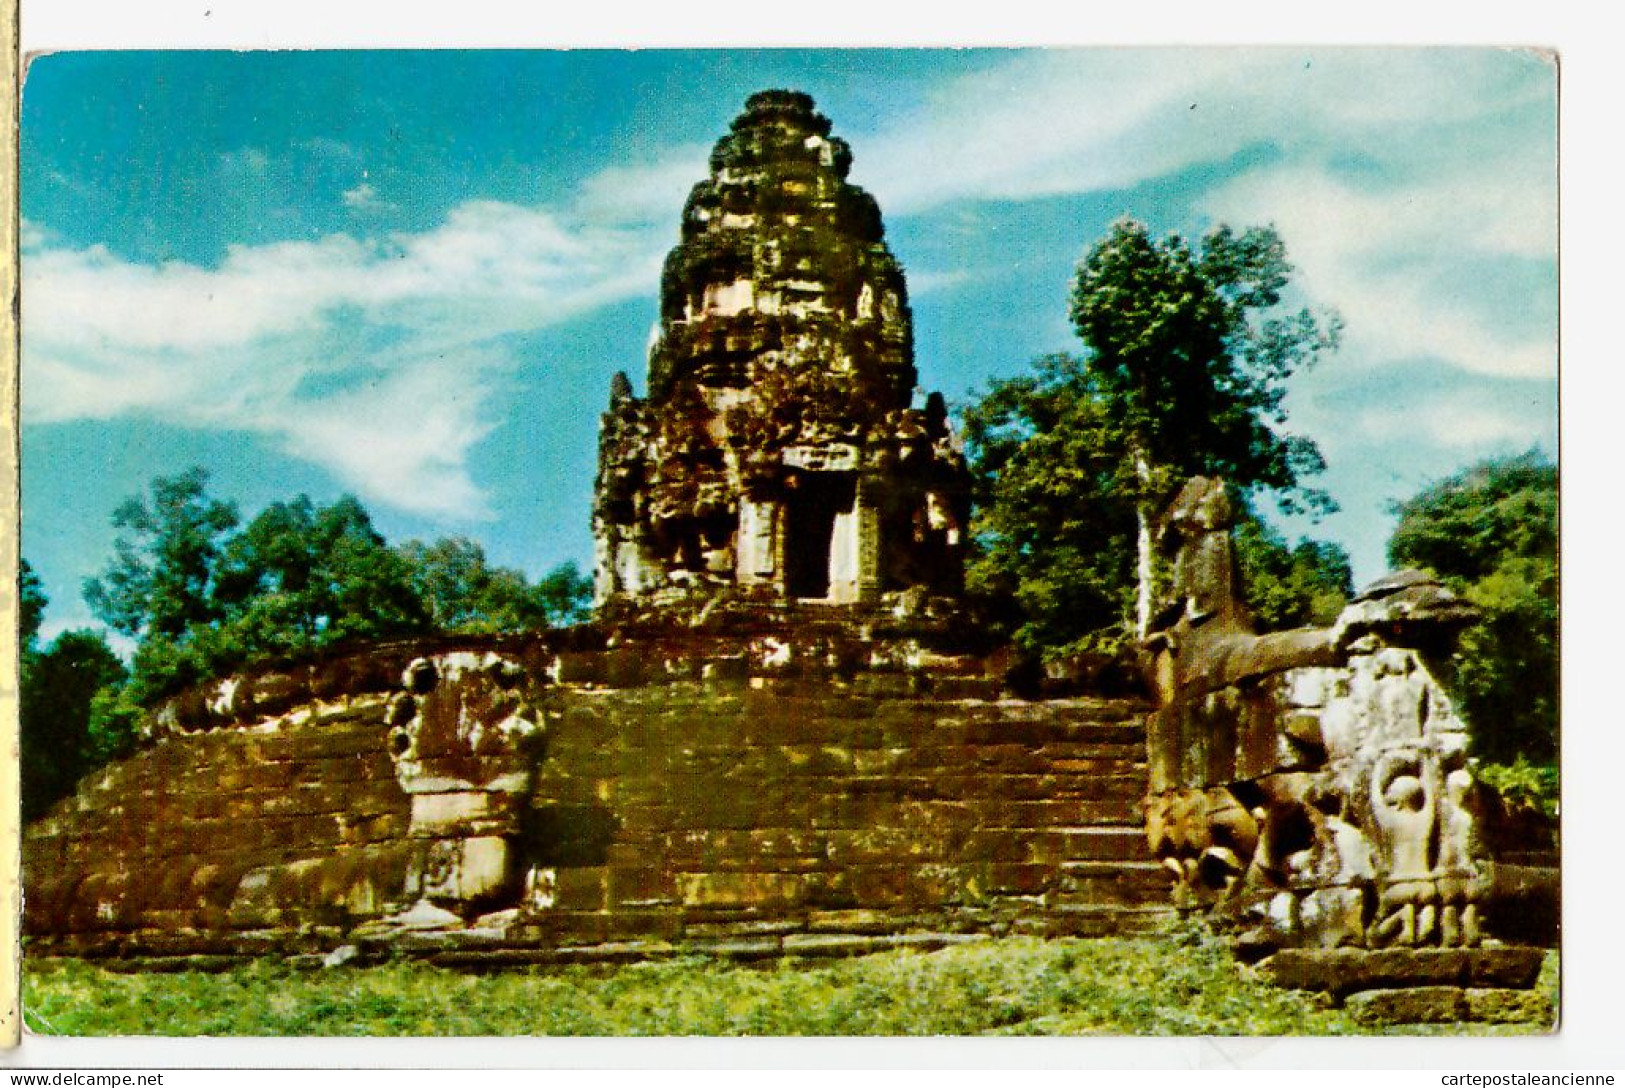 01058 ● Cambodge NEAK PEAN ANGKOR WAT CAMBODJA 1940s De SIN-KEN Chez PHA VA Kampong Chan -Hotel International PNOMPENH - Cambodge